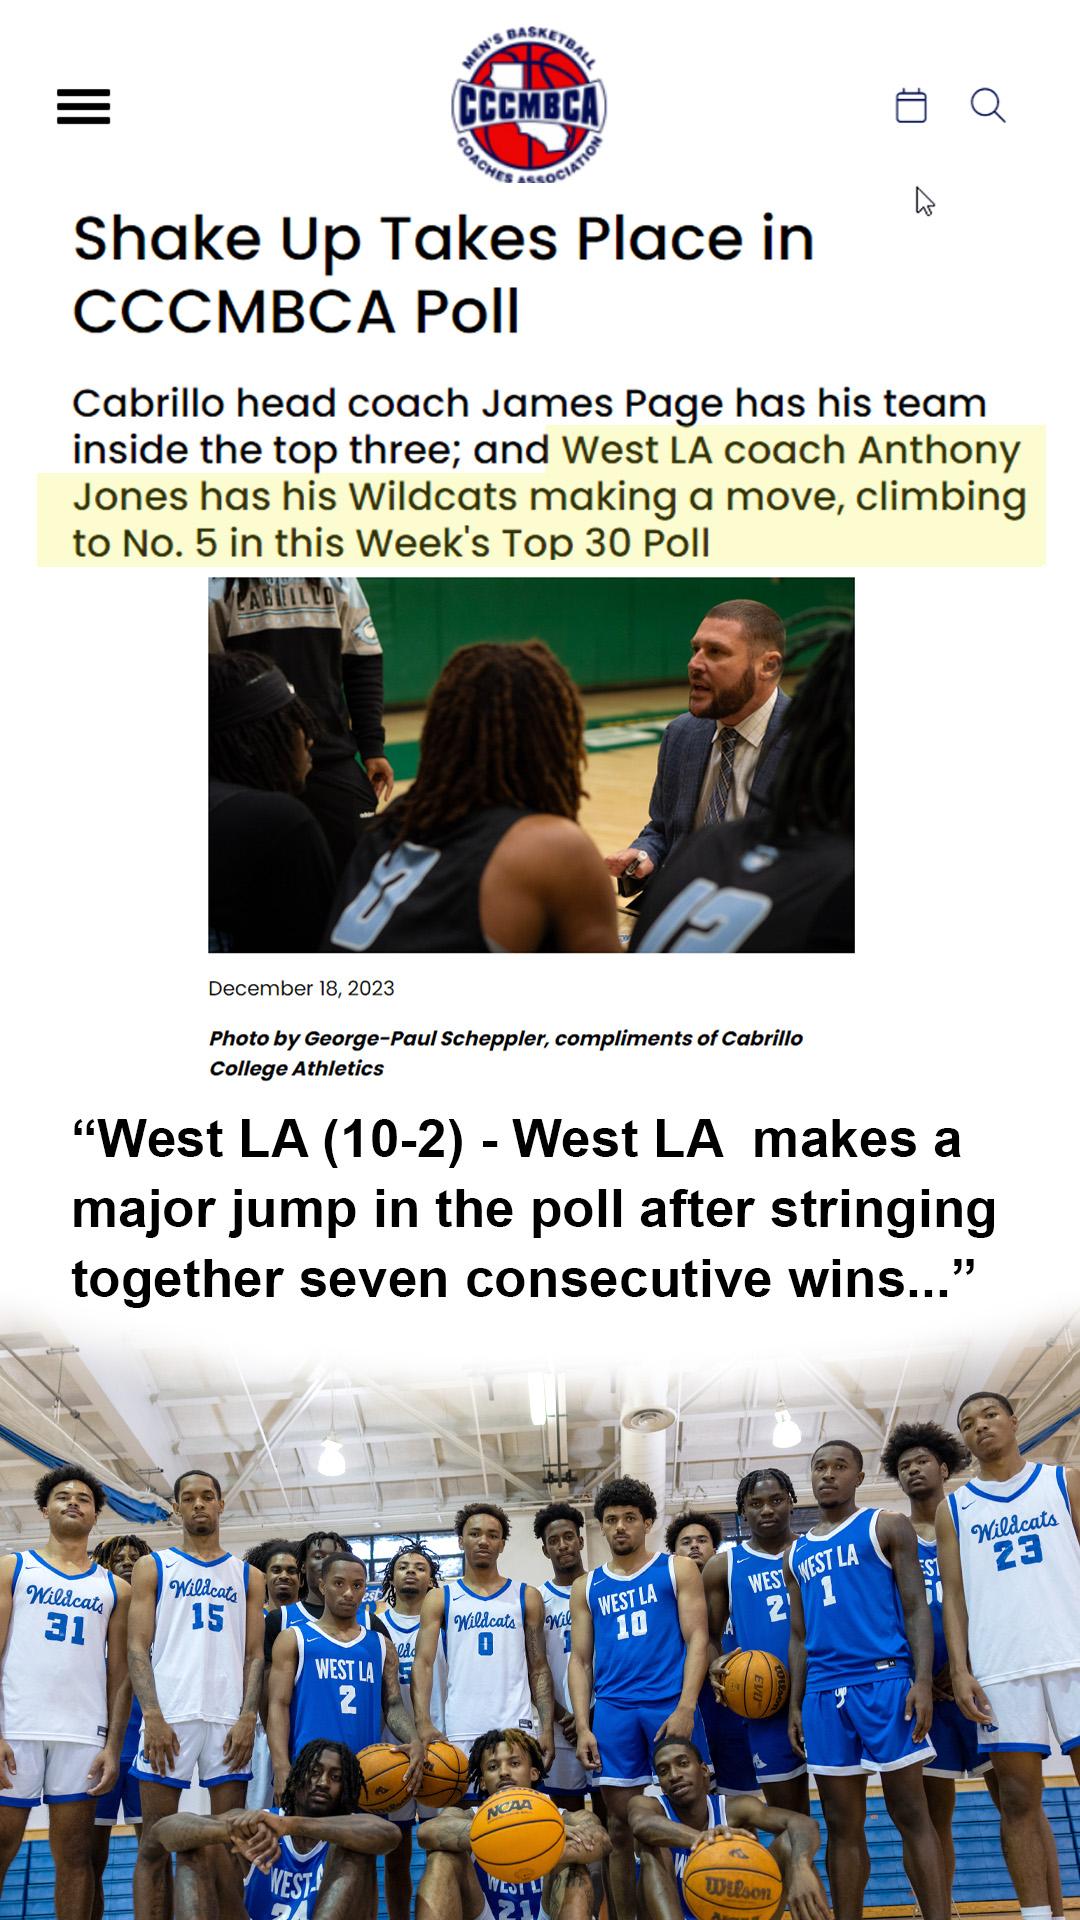 Screen print from CCCMBCA web site that praises WLAC’s men’s basketball team